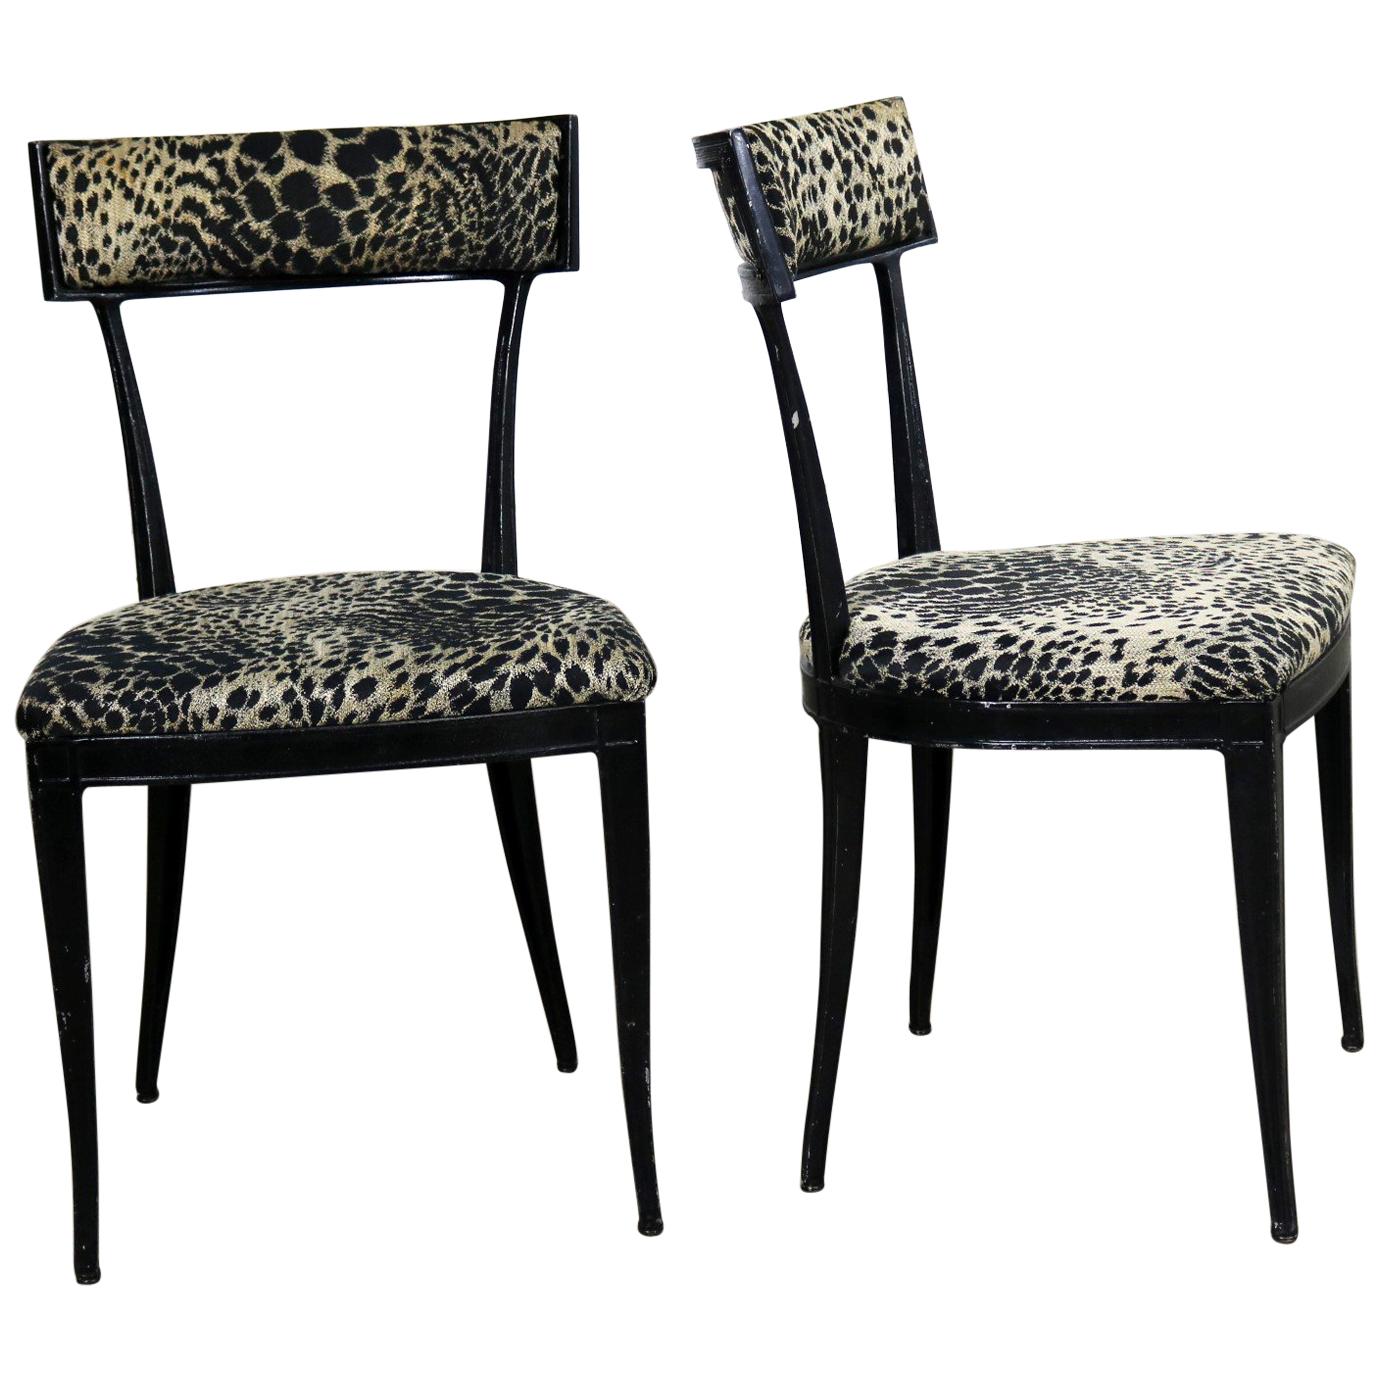 Black Art Deco & Animal Print Side Chairs Cast Aluminium Crucible Products, Pair